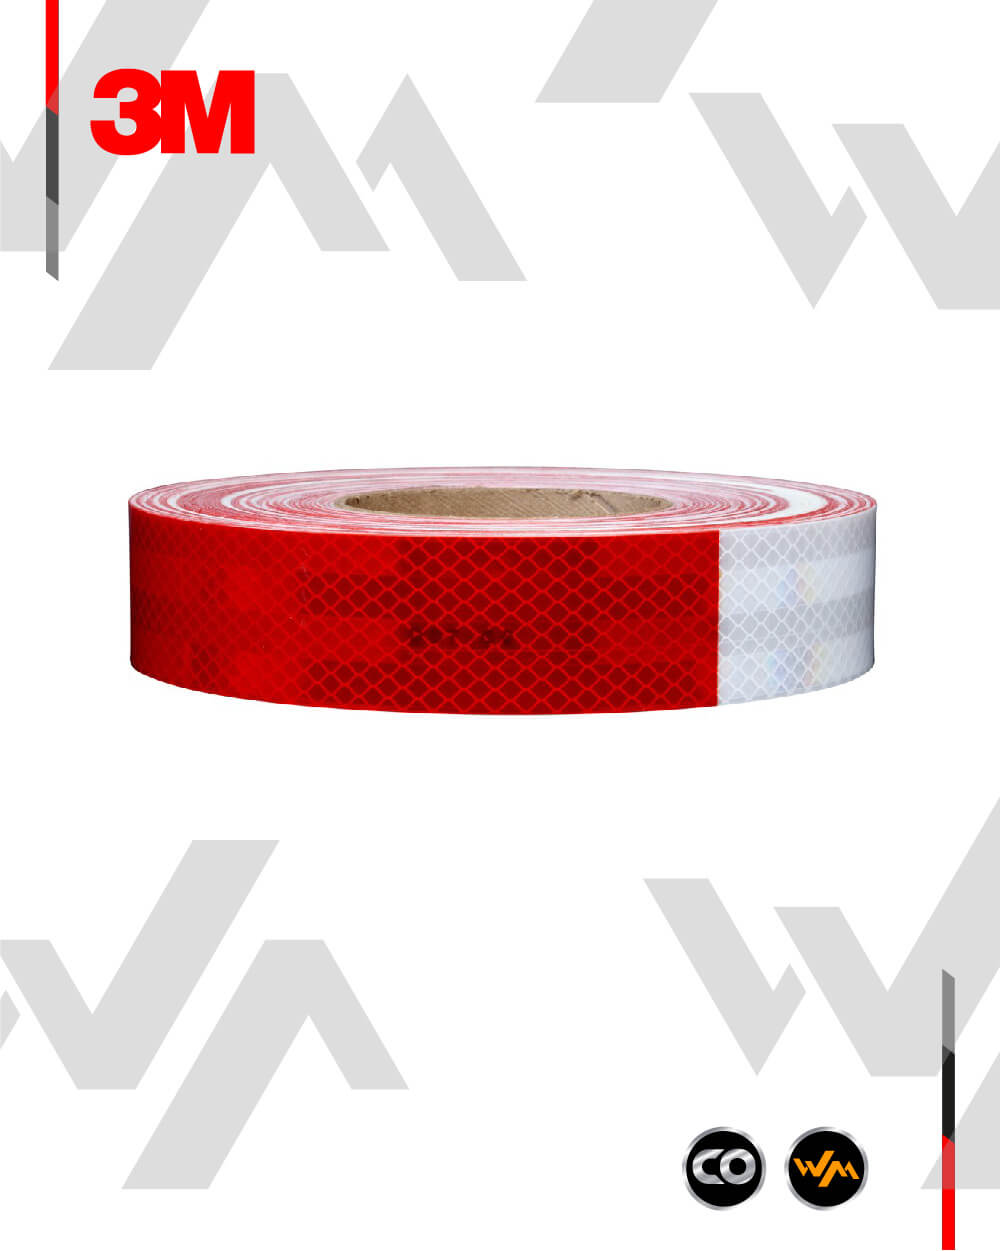 Caja cinta reflectante rojo/blanco 45.7 metros